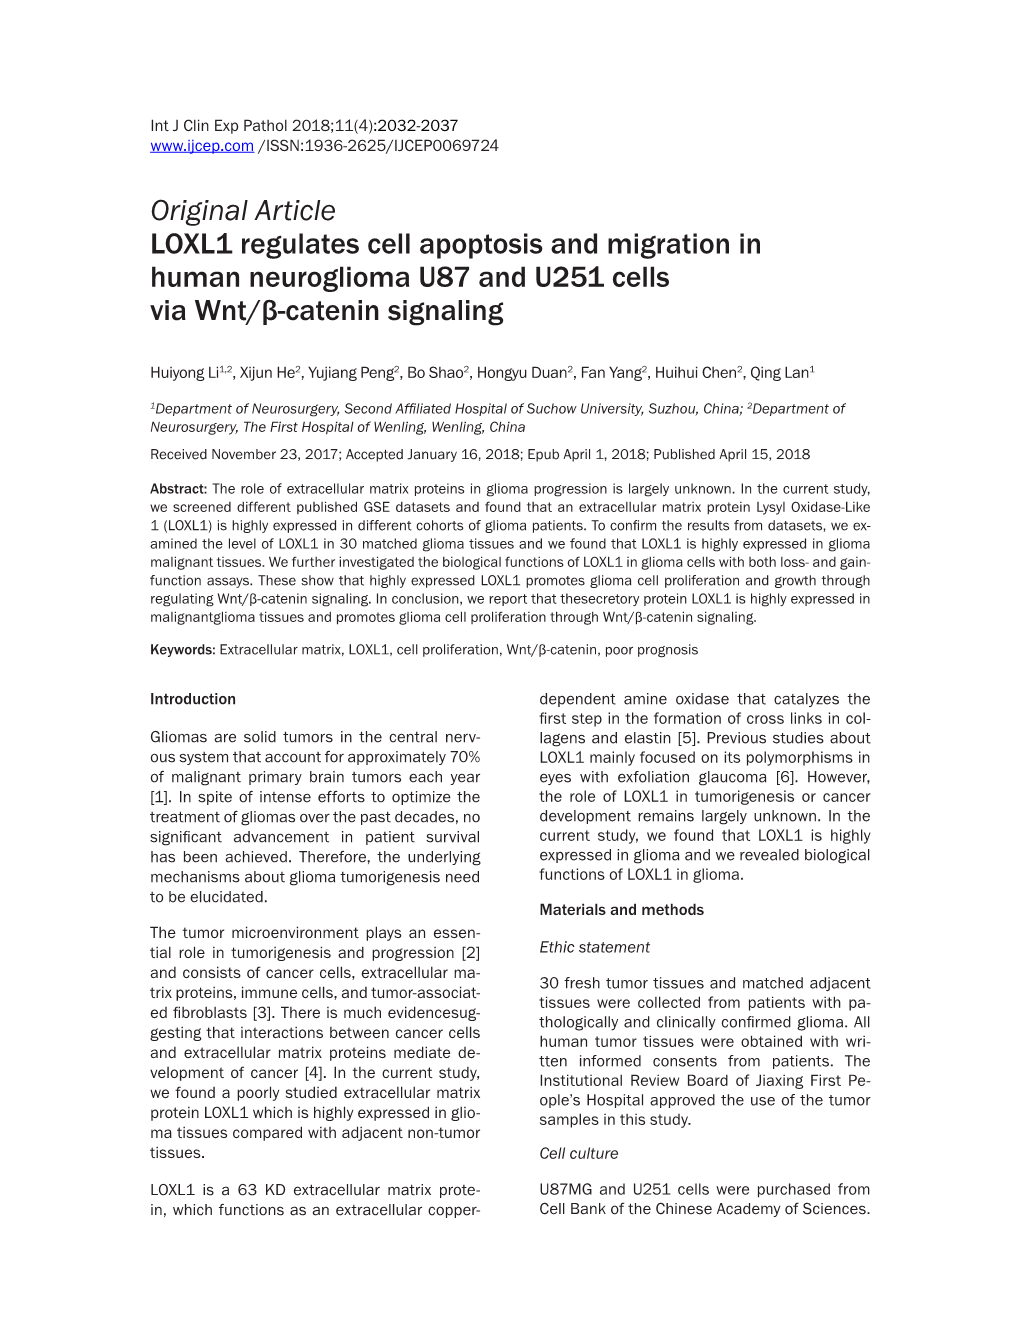 Original Article LOXL1 Regulates Cell Apoptosis and Migration in Human Neuroglioma U87 and U251 Cells Via Wnt/Β-Catenin Signaling